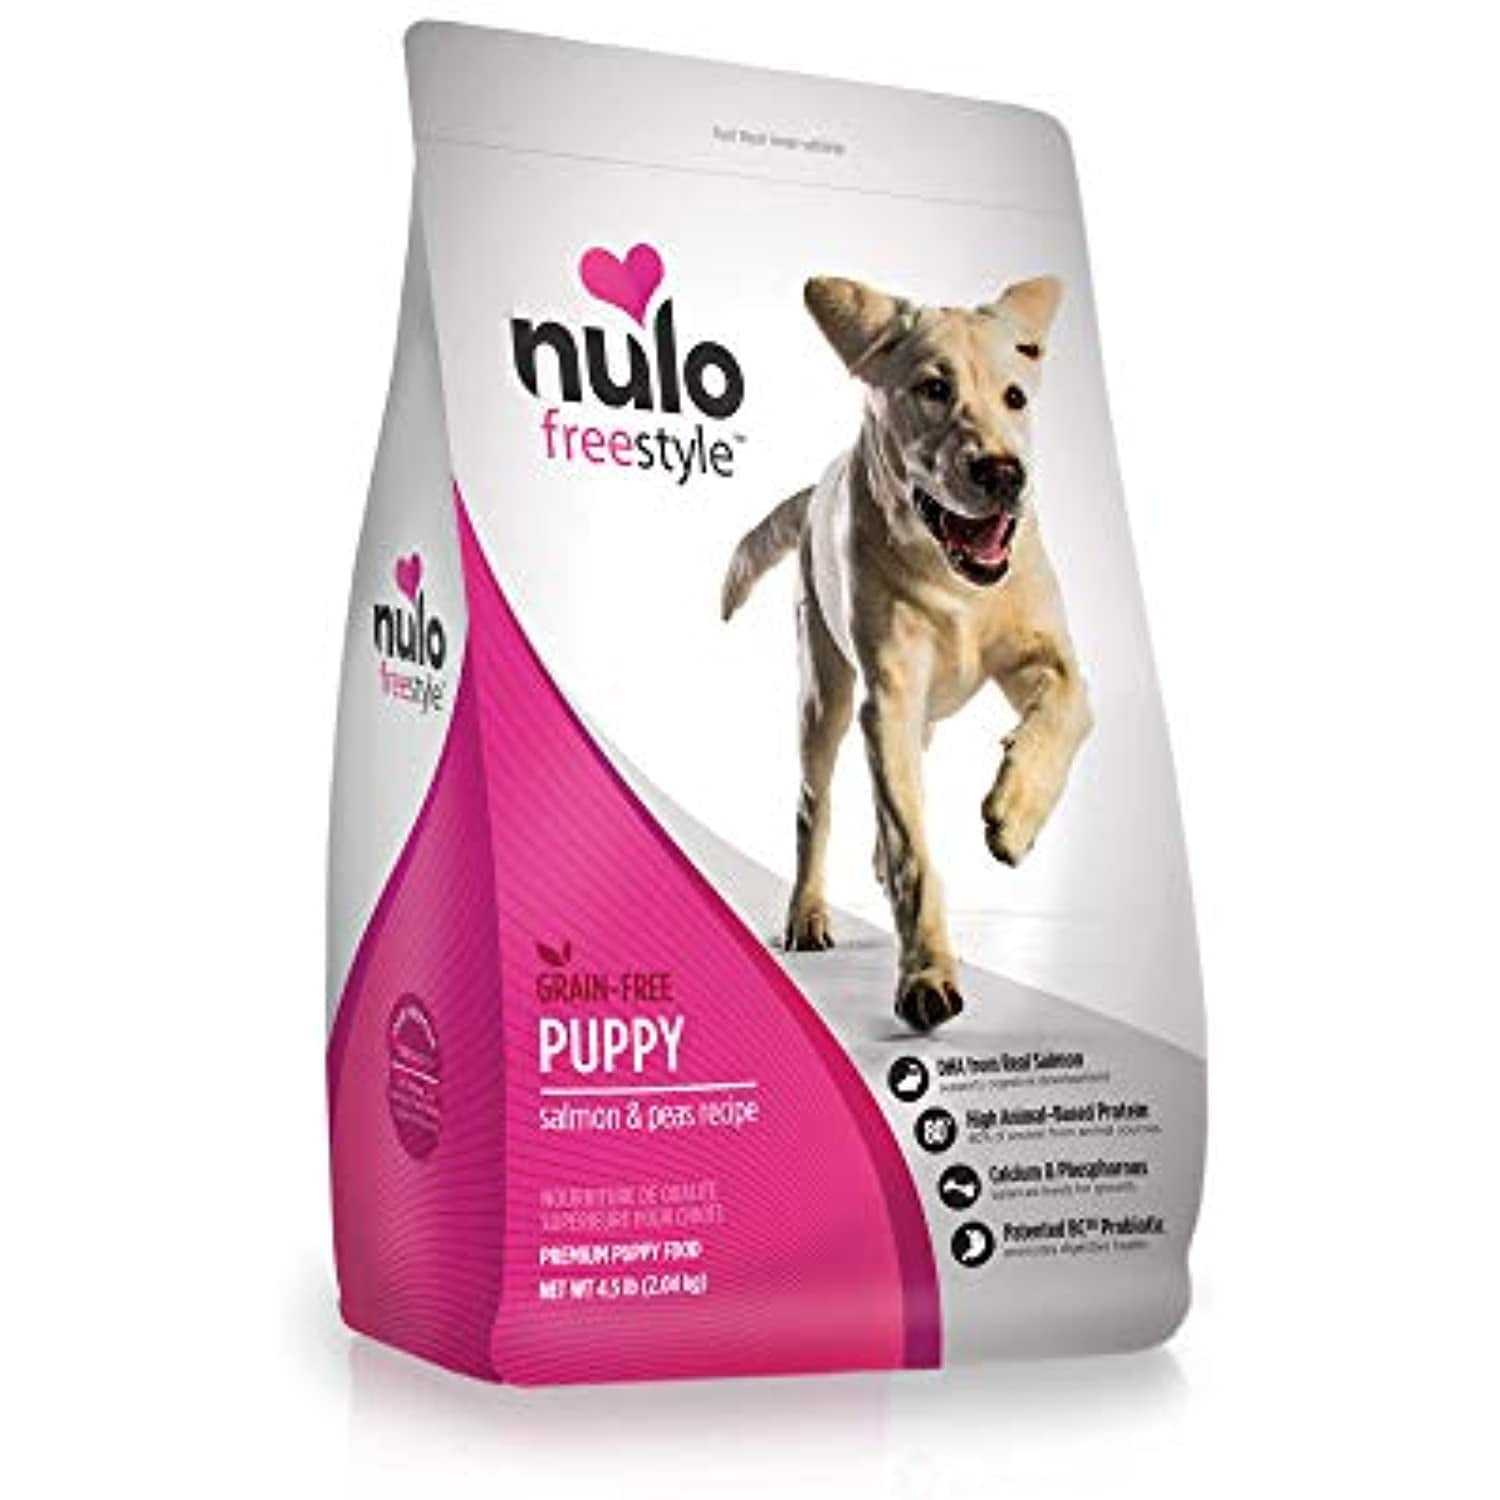 Nulo Freestyle Puppy Grain-Free Puppy